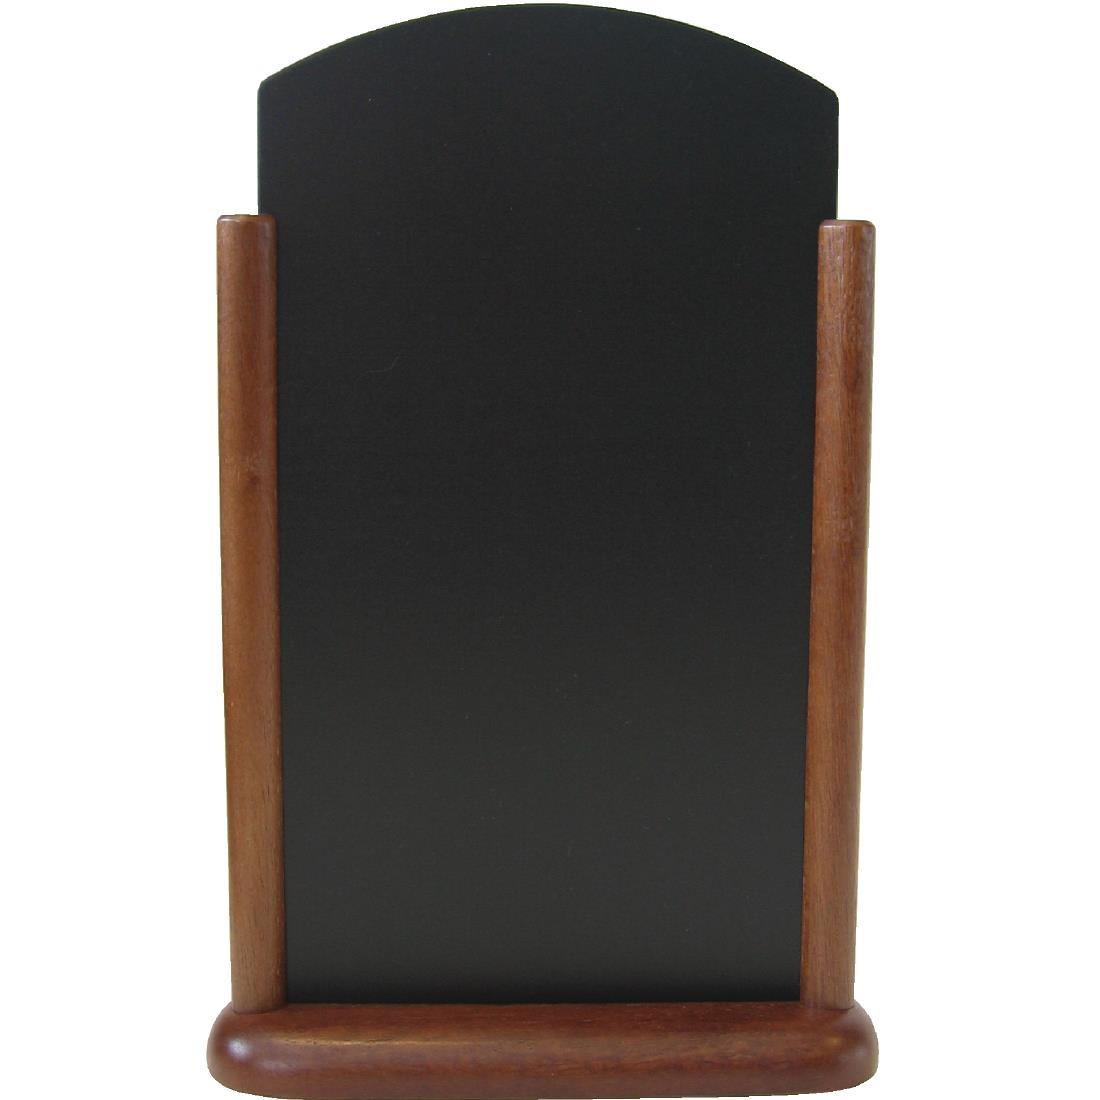 Securit Pillared Table Top Blackboard 410 x 265mm Mahogany - CE417  - 1